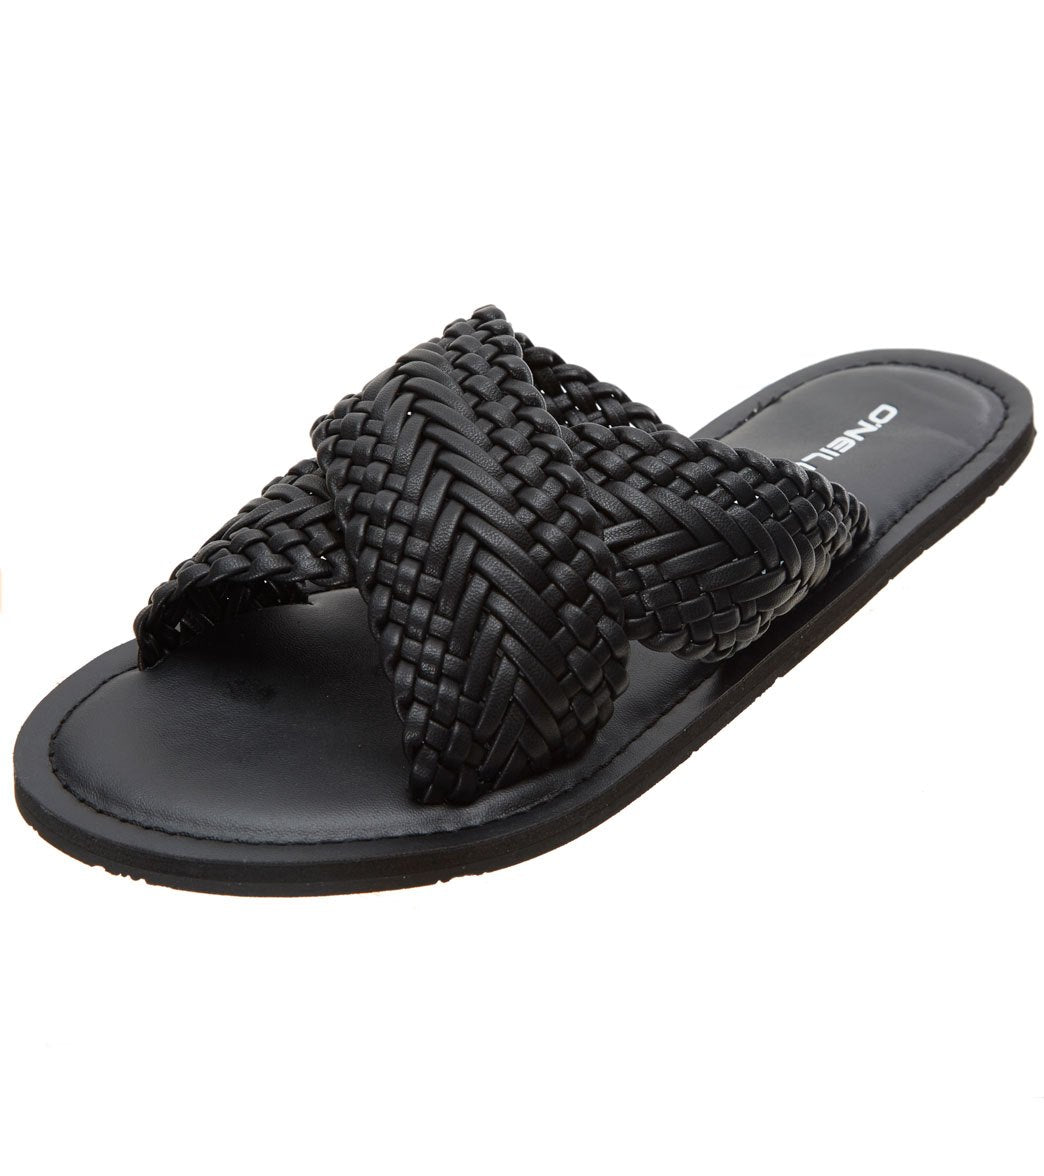 O'neill Women's Palm Springs Slides Sandals - Black 6 - Swimoutlet.com